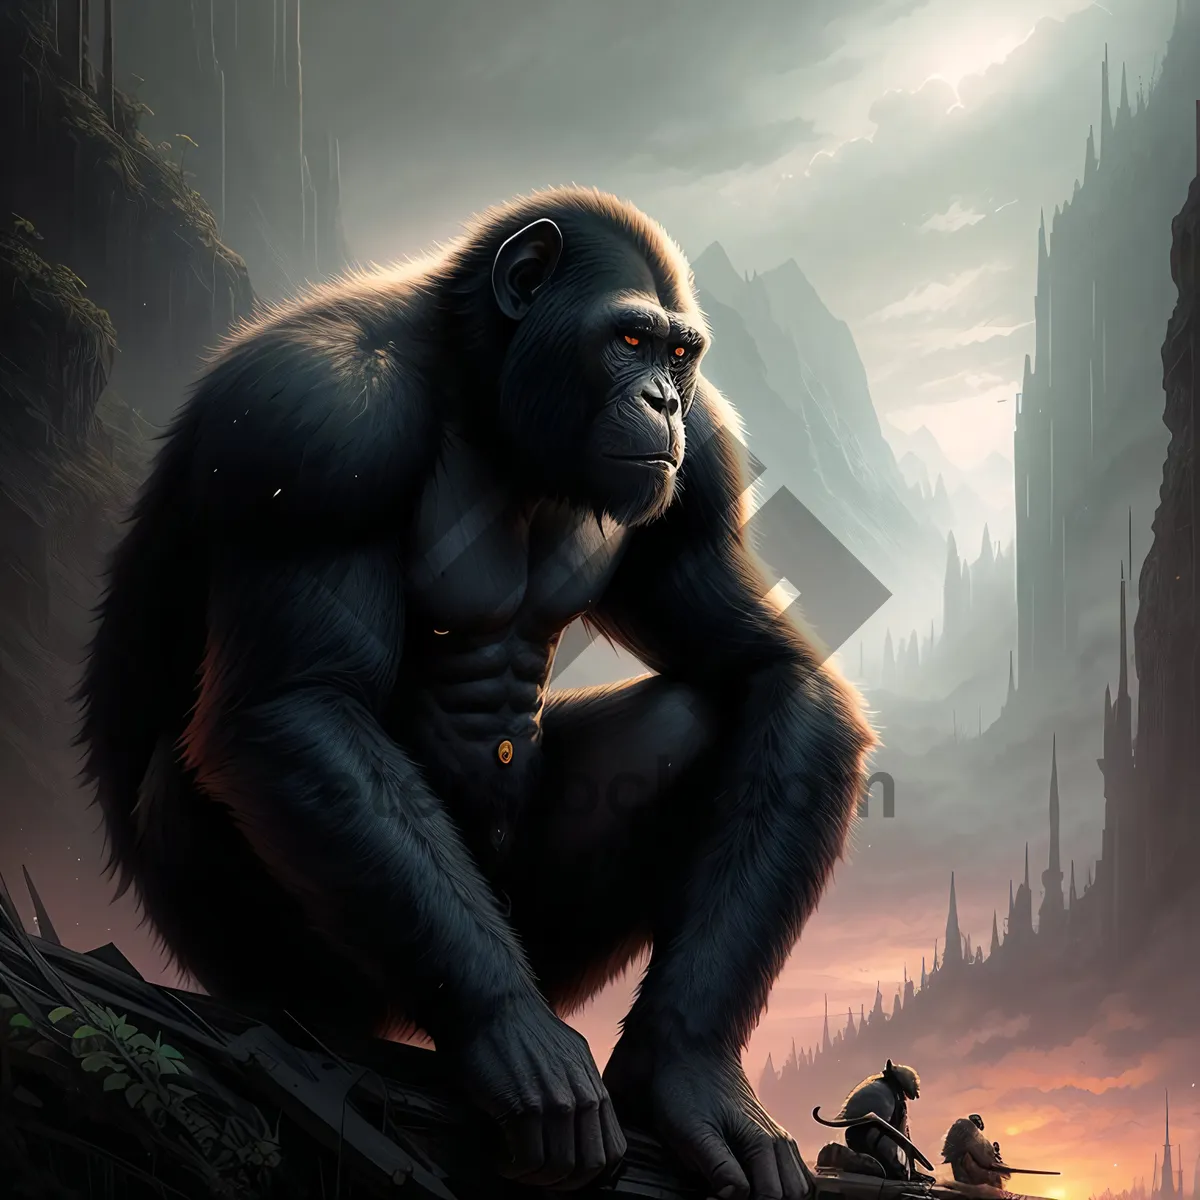 Picture of Wild Primate Jungle Statue: Majestic Orangutan in Natural Habitat